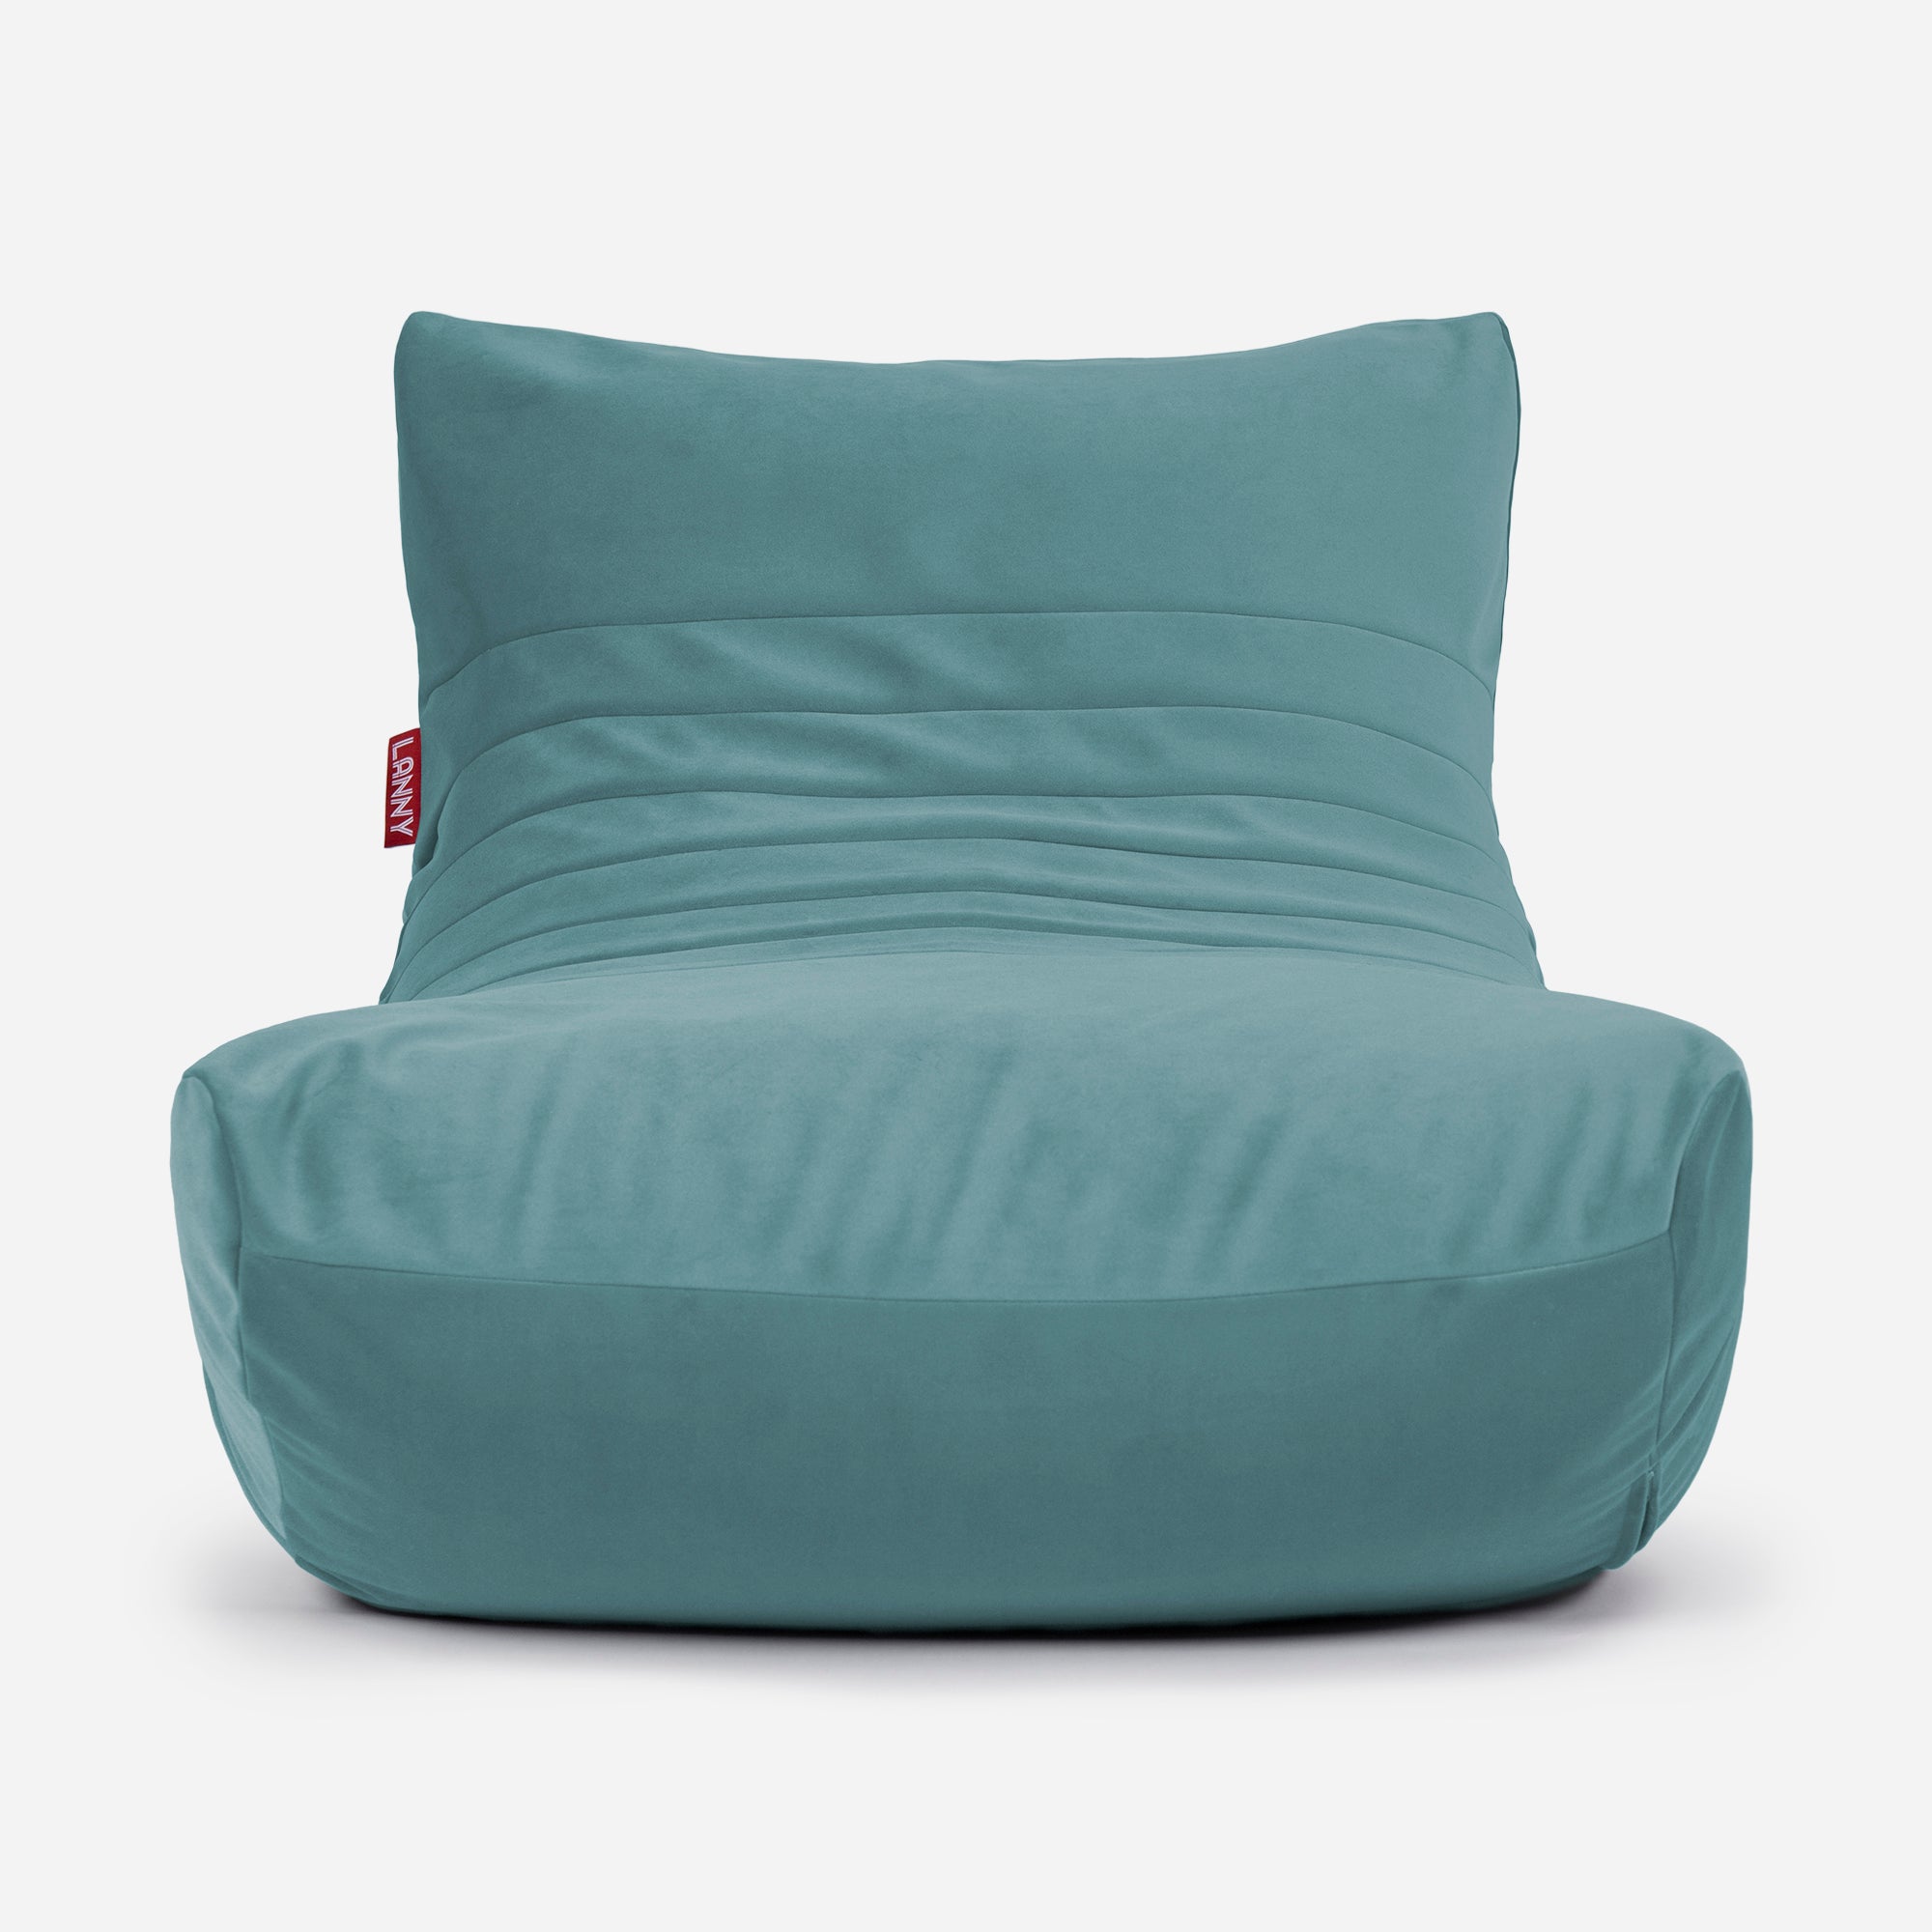 Beanbag Curvy Design Turquoise color